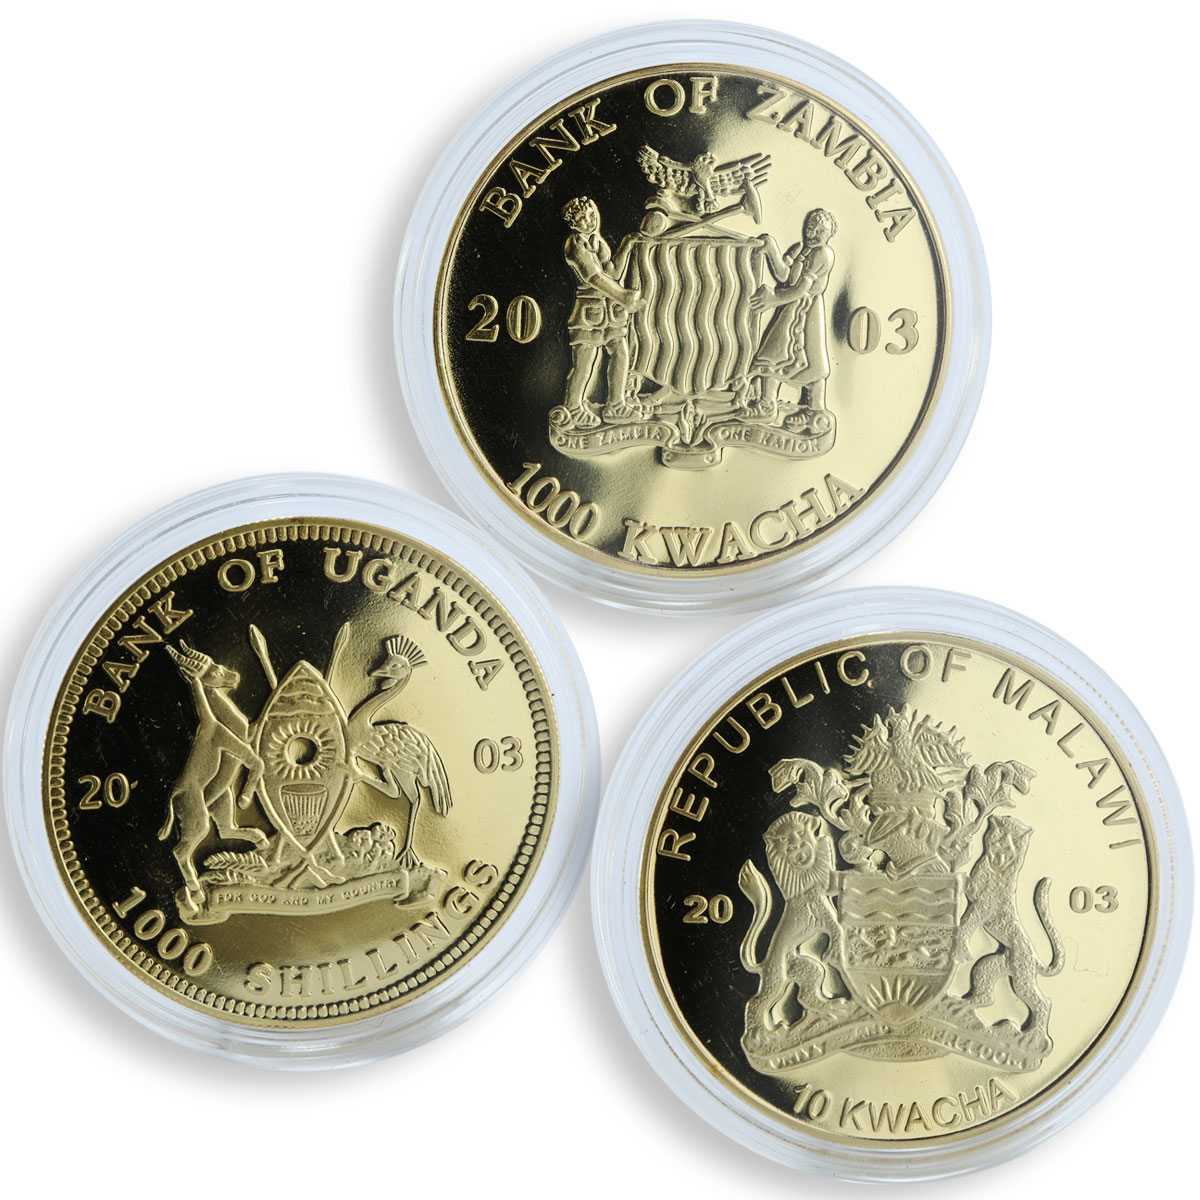 Malawi Zambia Uganda set of 3 coins Pope John Paul II gilded proof coins 2003